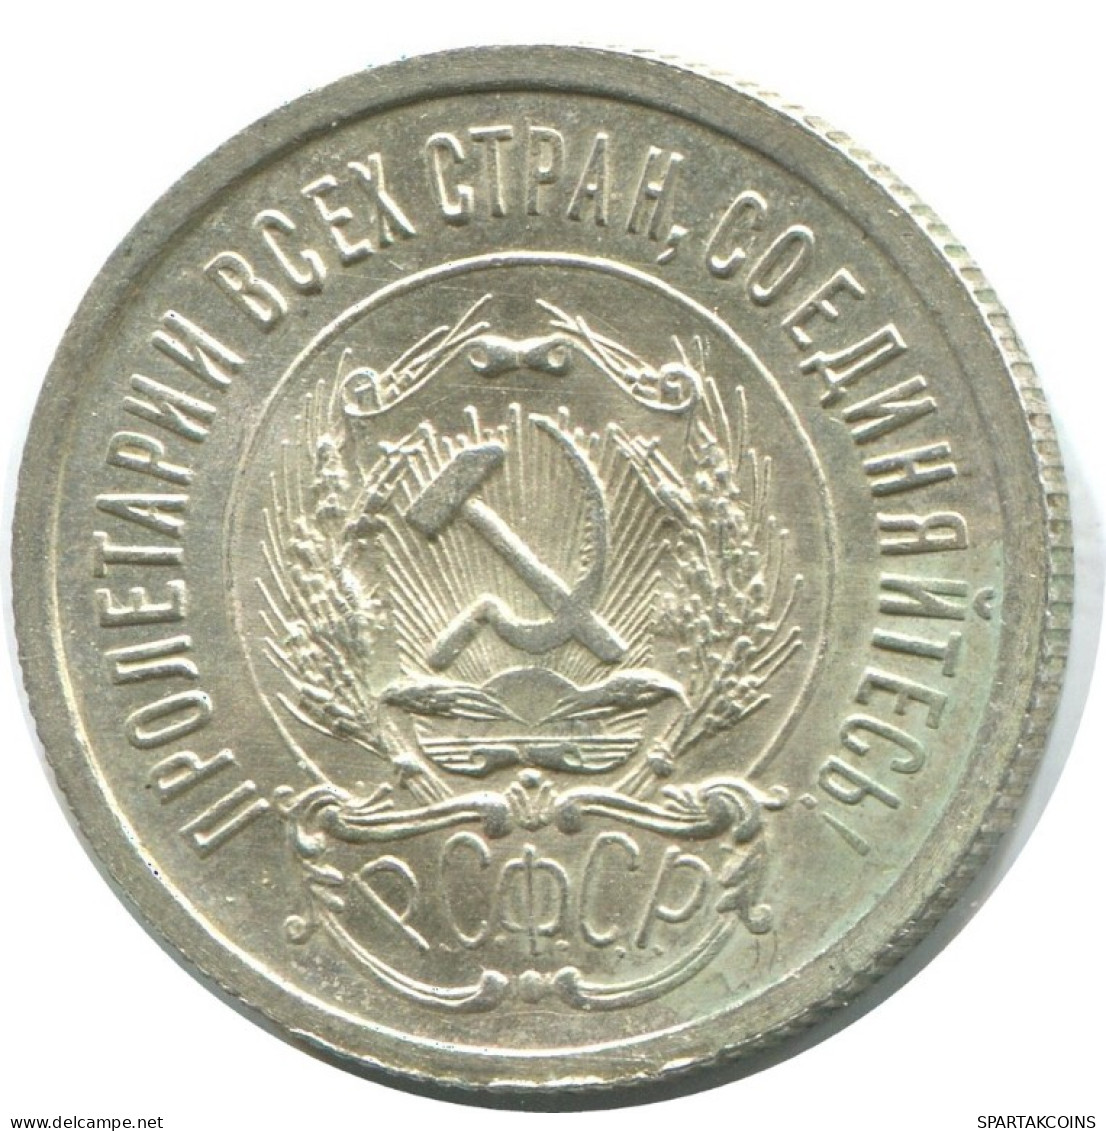 20 KOPEKS 1923 RUSSIA RSFSR SILVER Coin HIGH GRADE #AF702.U.A - Russie